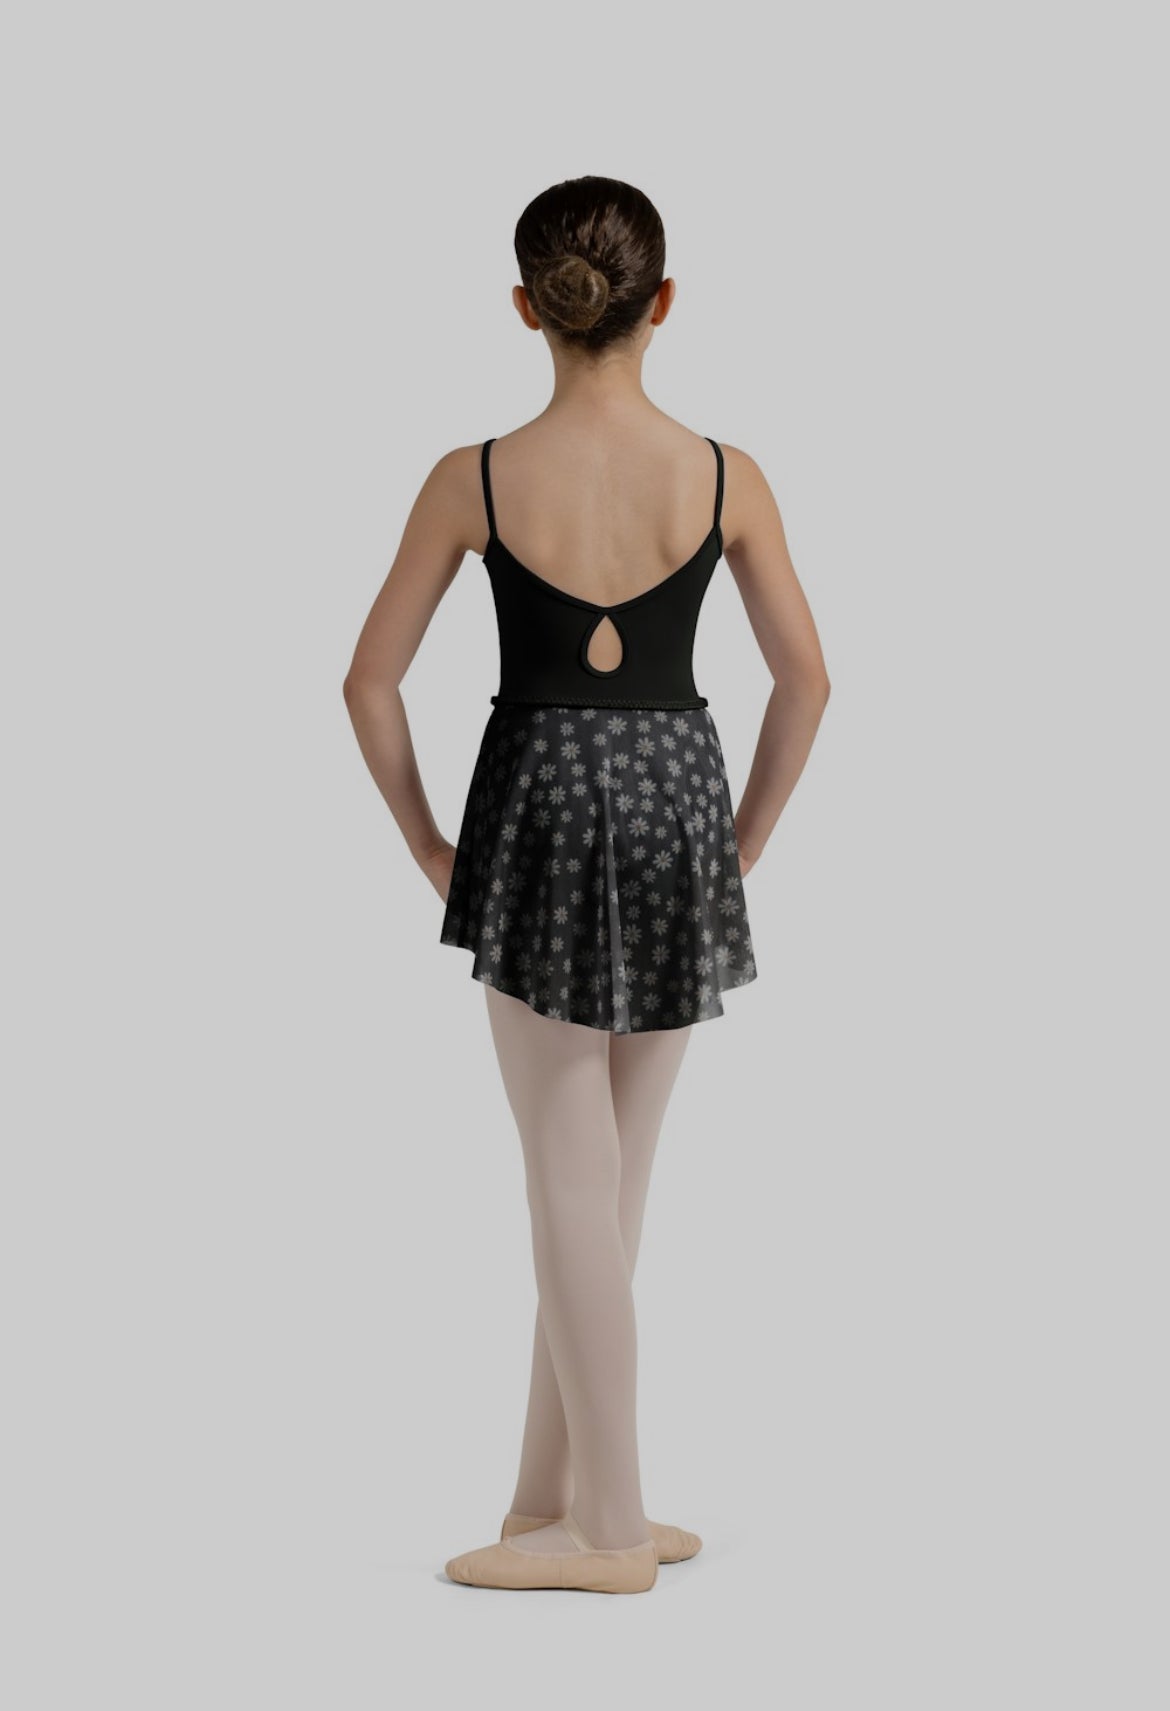 Mirella Miami Girl’s Black Floral Print Mesh Skirt with Braid